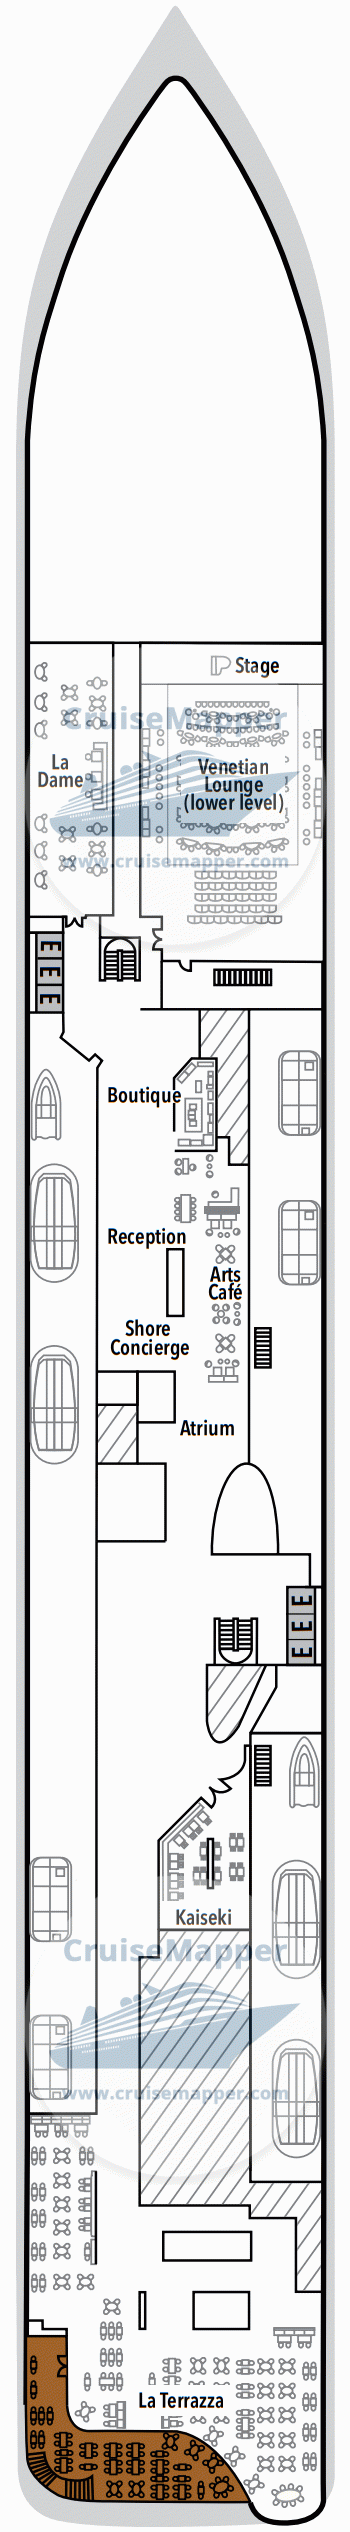 Silver Nova Deck Plan Cabins And Suites - starter kit hobbies